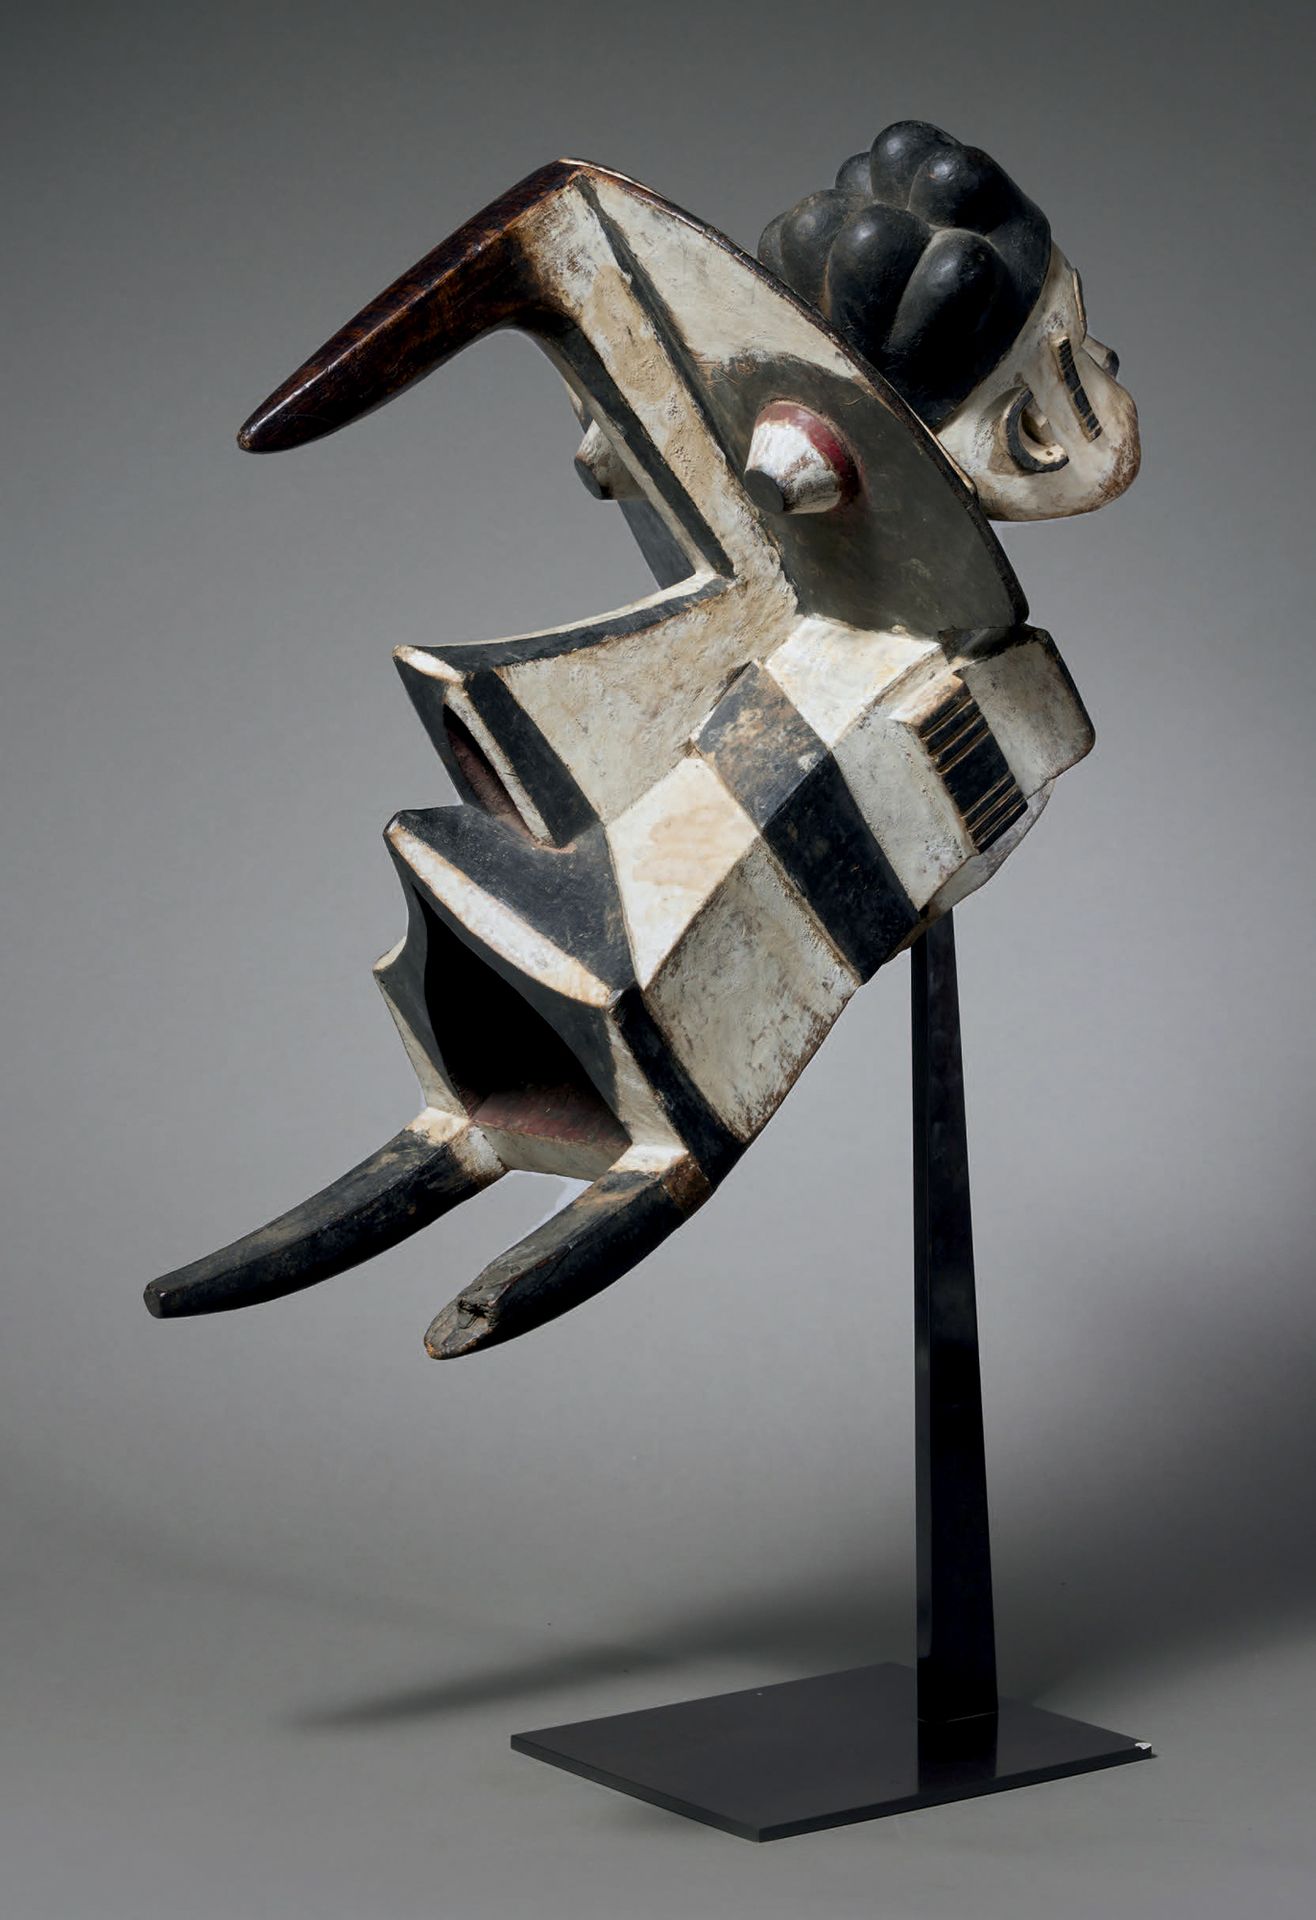 Null Máscara Igbo-Izzi Ogbodo enyi
Nigeria
Madera
H. 36 cm - L. 60 cm
Máscara de&hellip;